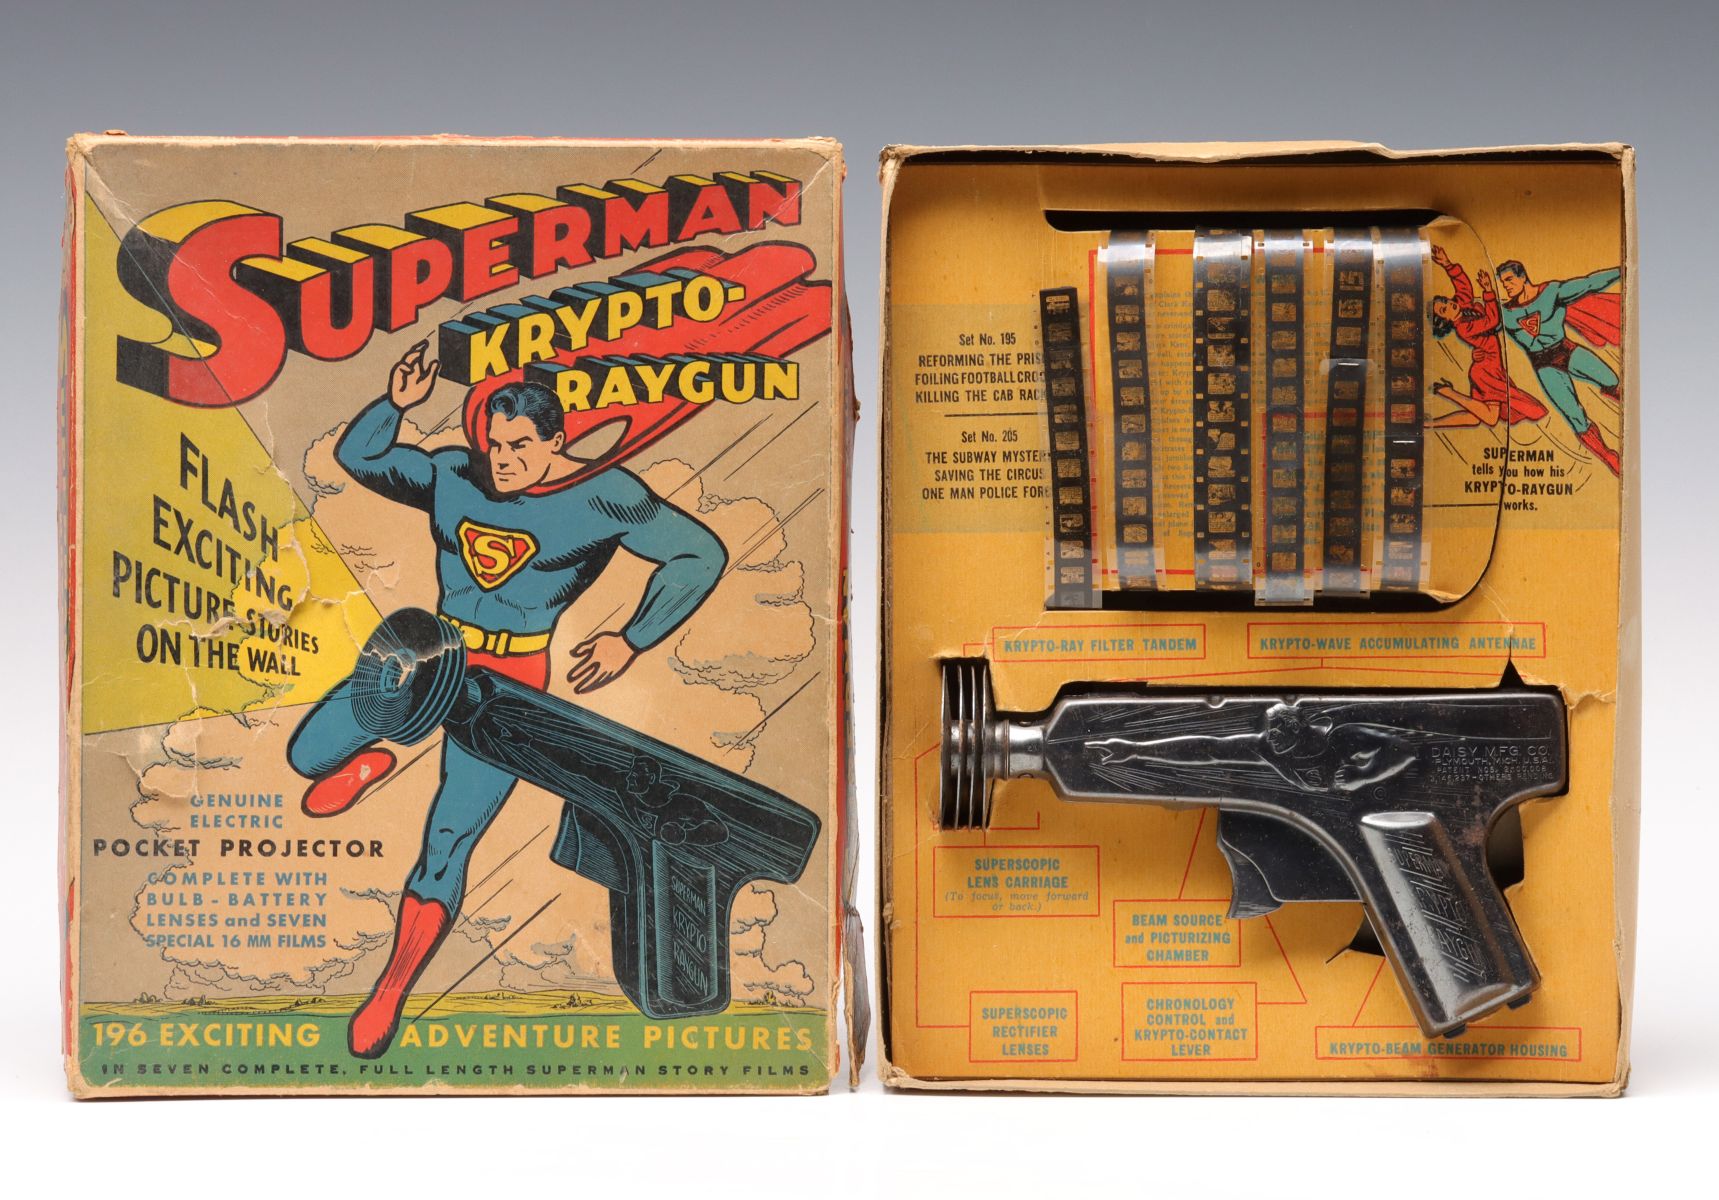 A SUPERMAN KRYPTO-RAYGUN IN THE ORIGINAL BOX